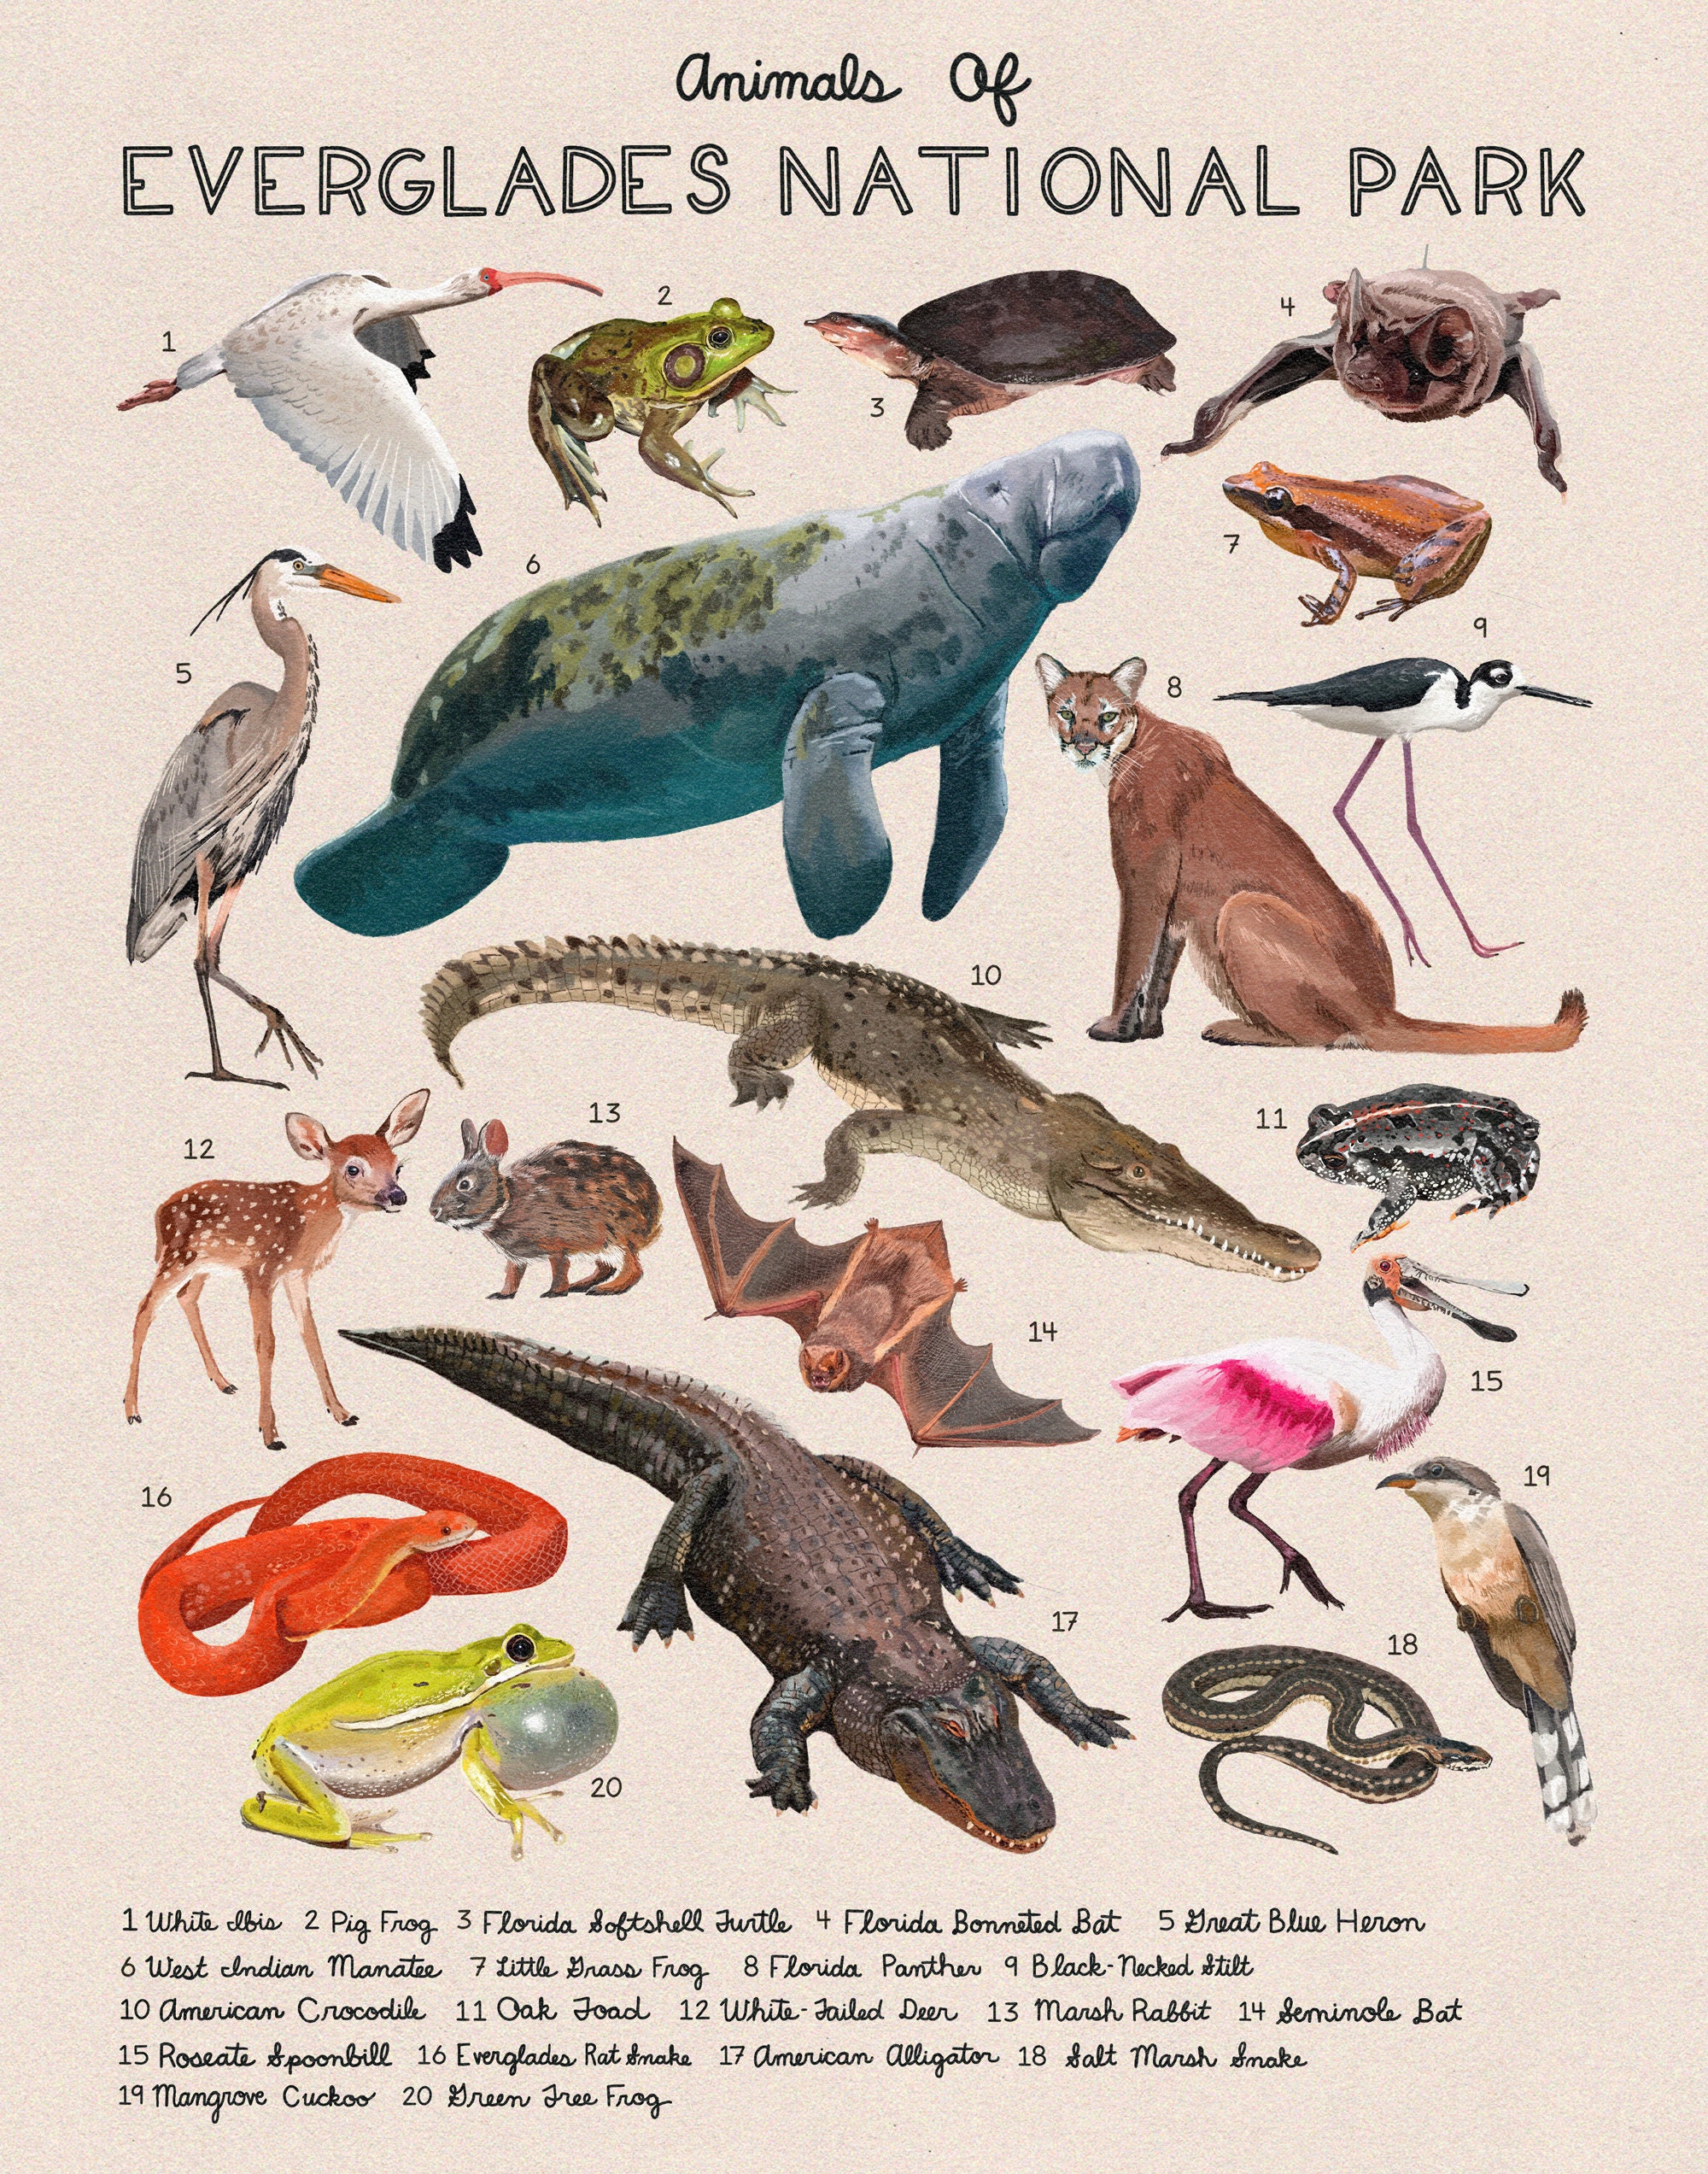 Animals of Everglades National Park 16x20 - Etsy